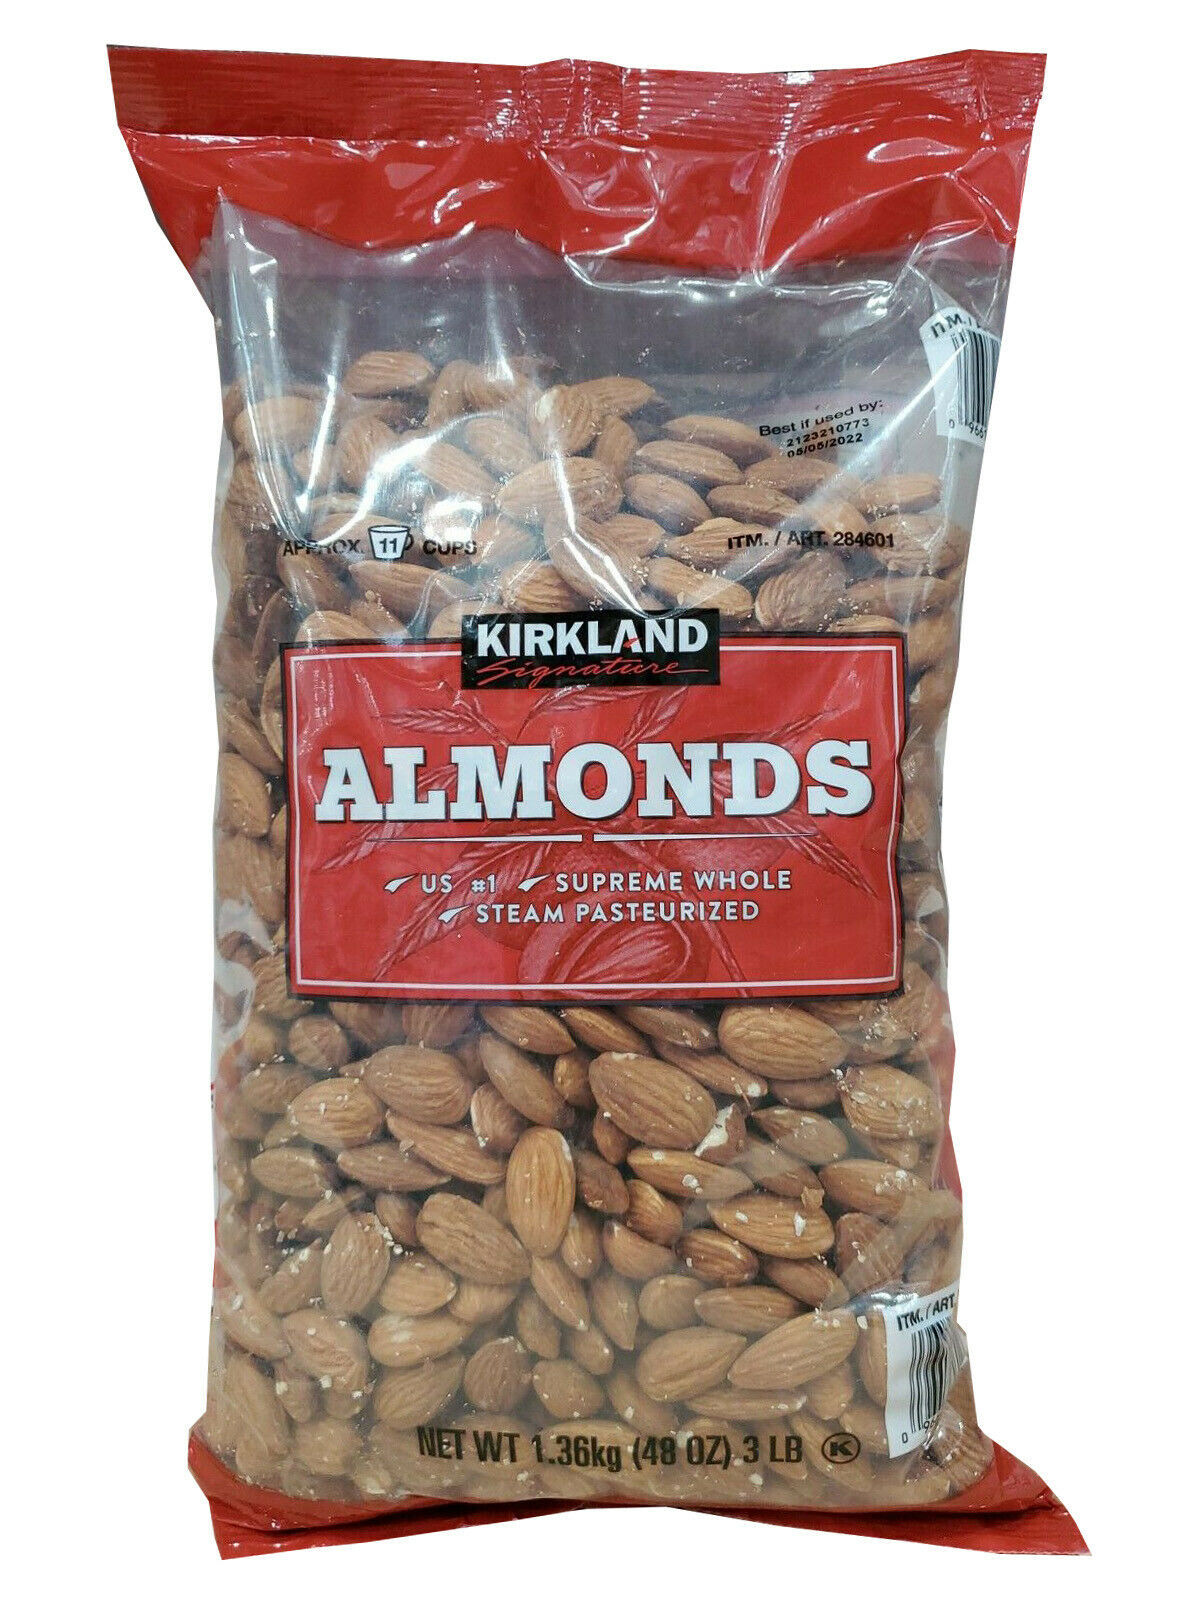  Kirkland Signature Supreme Whole Almonds 3 Lb,  Pound    - $16.70